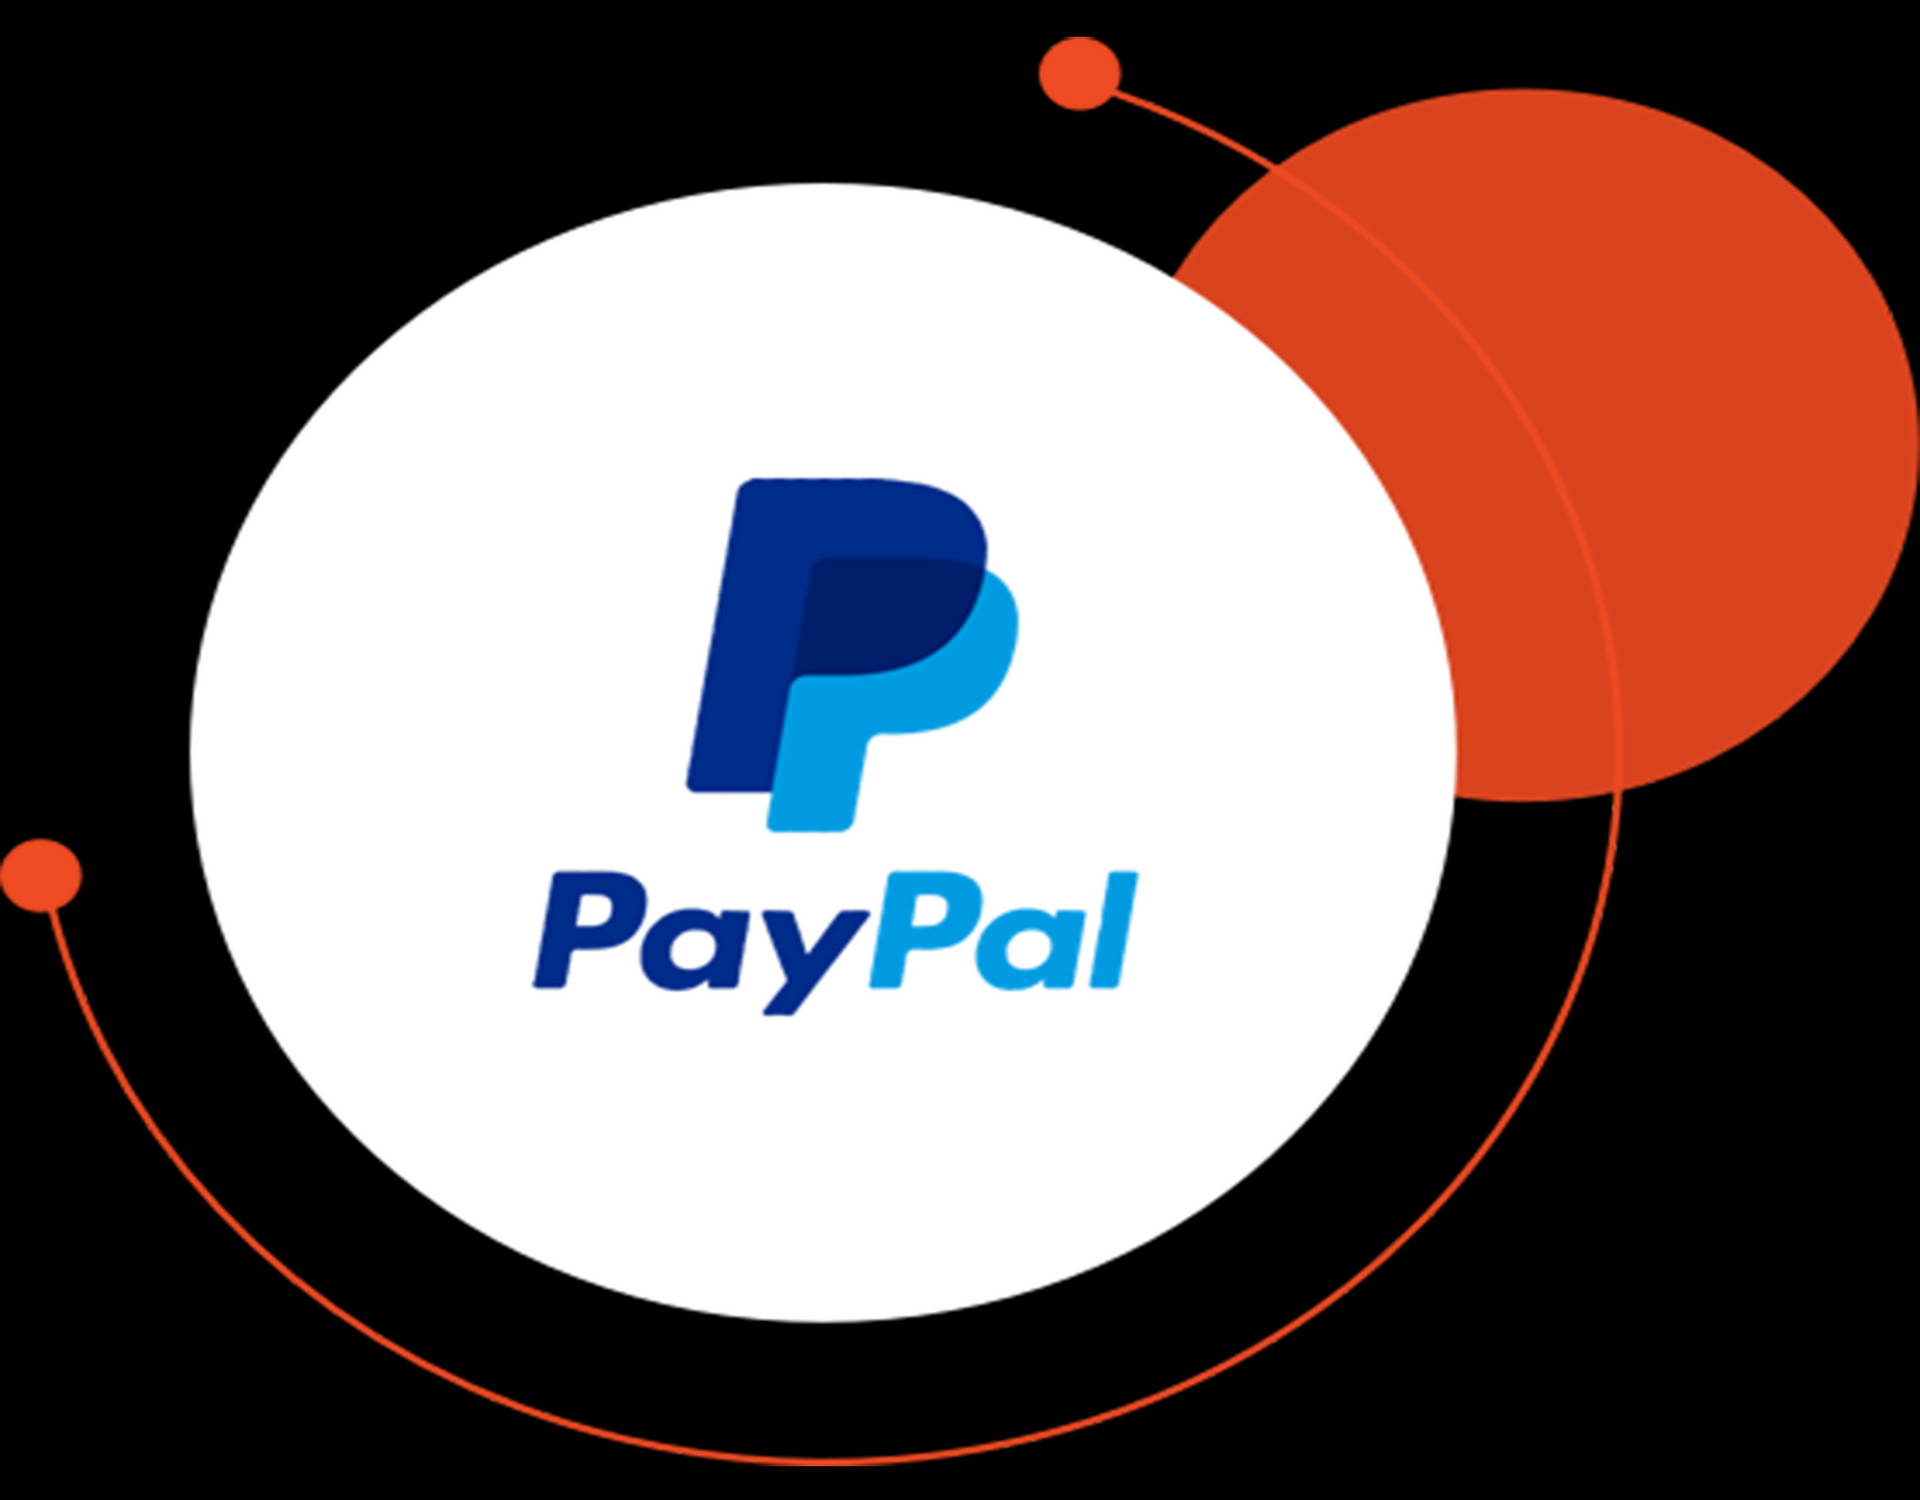 Paypal Circles Design